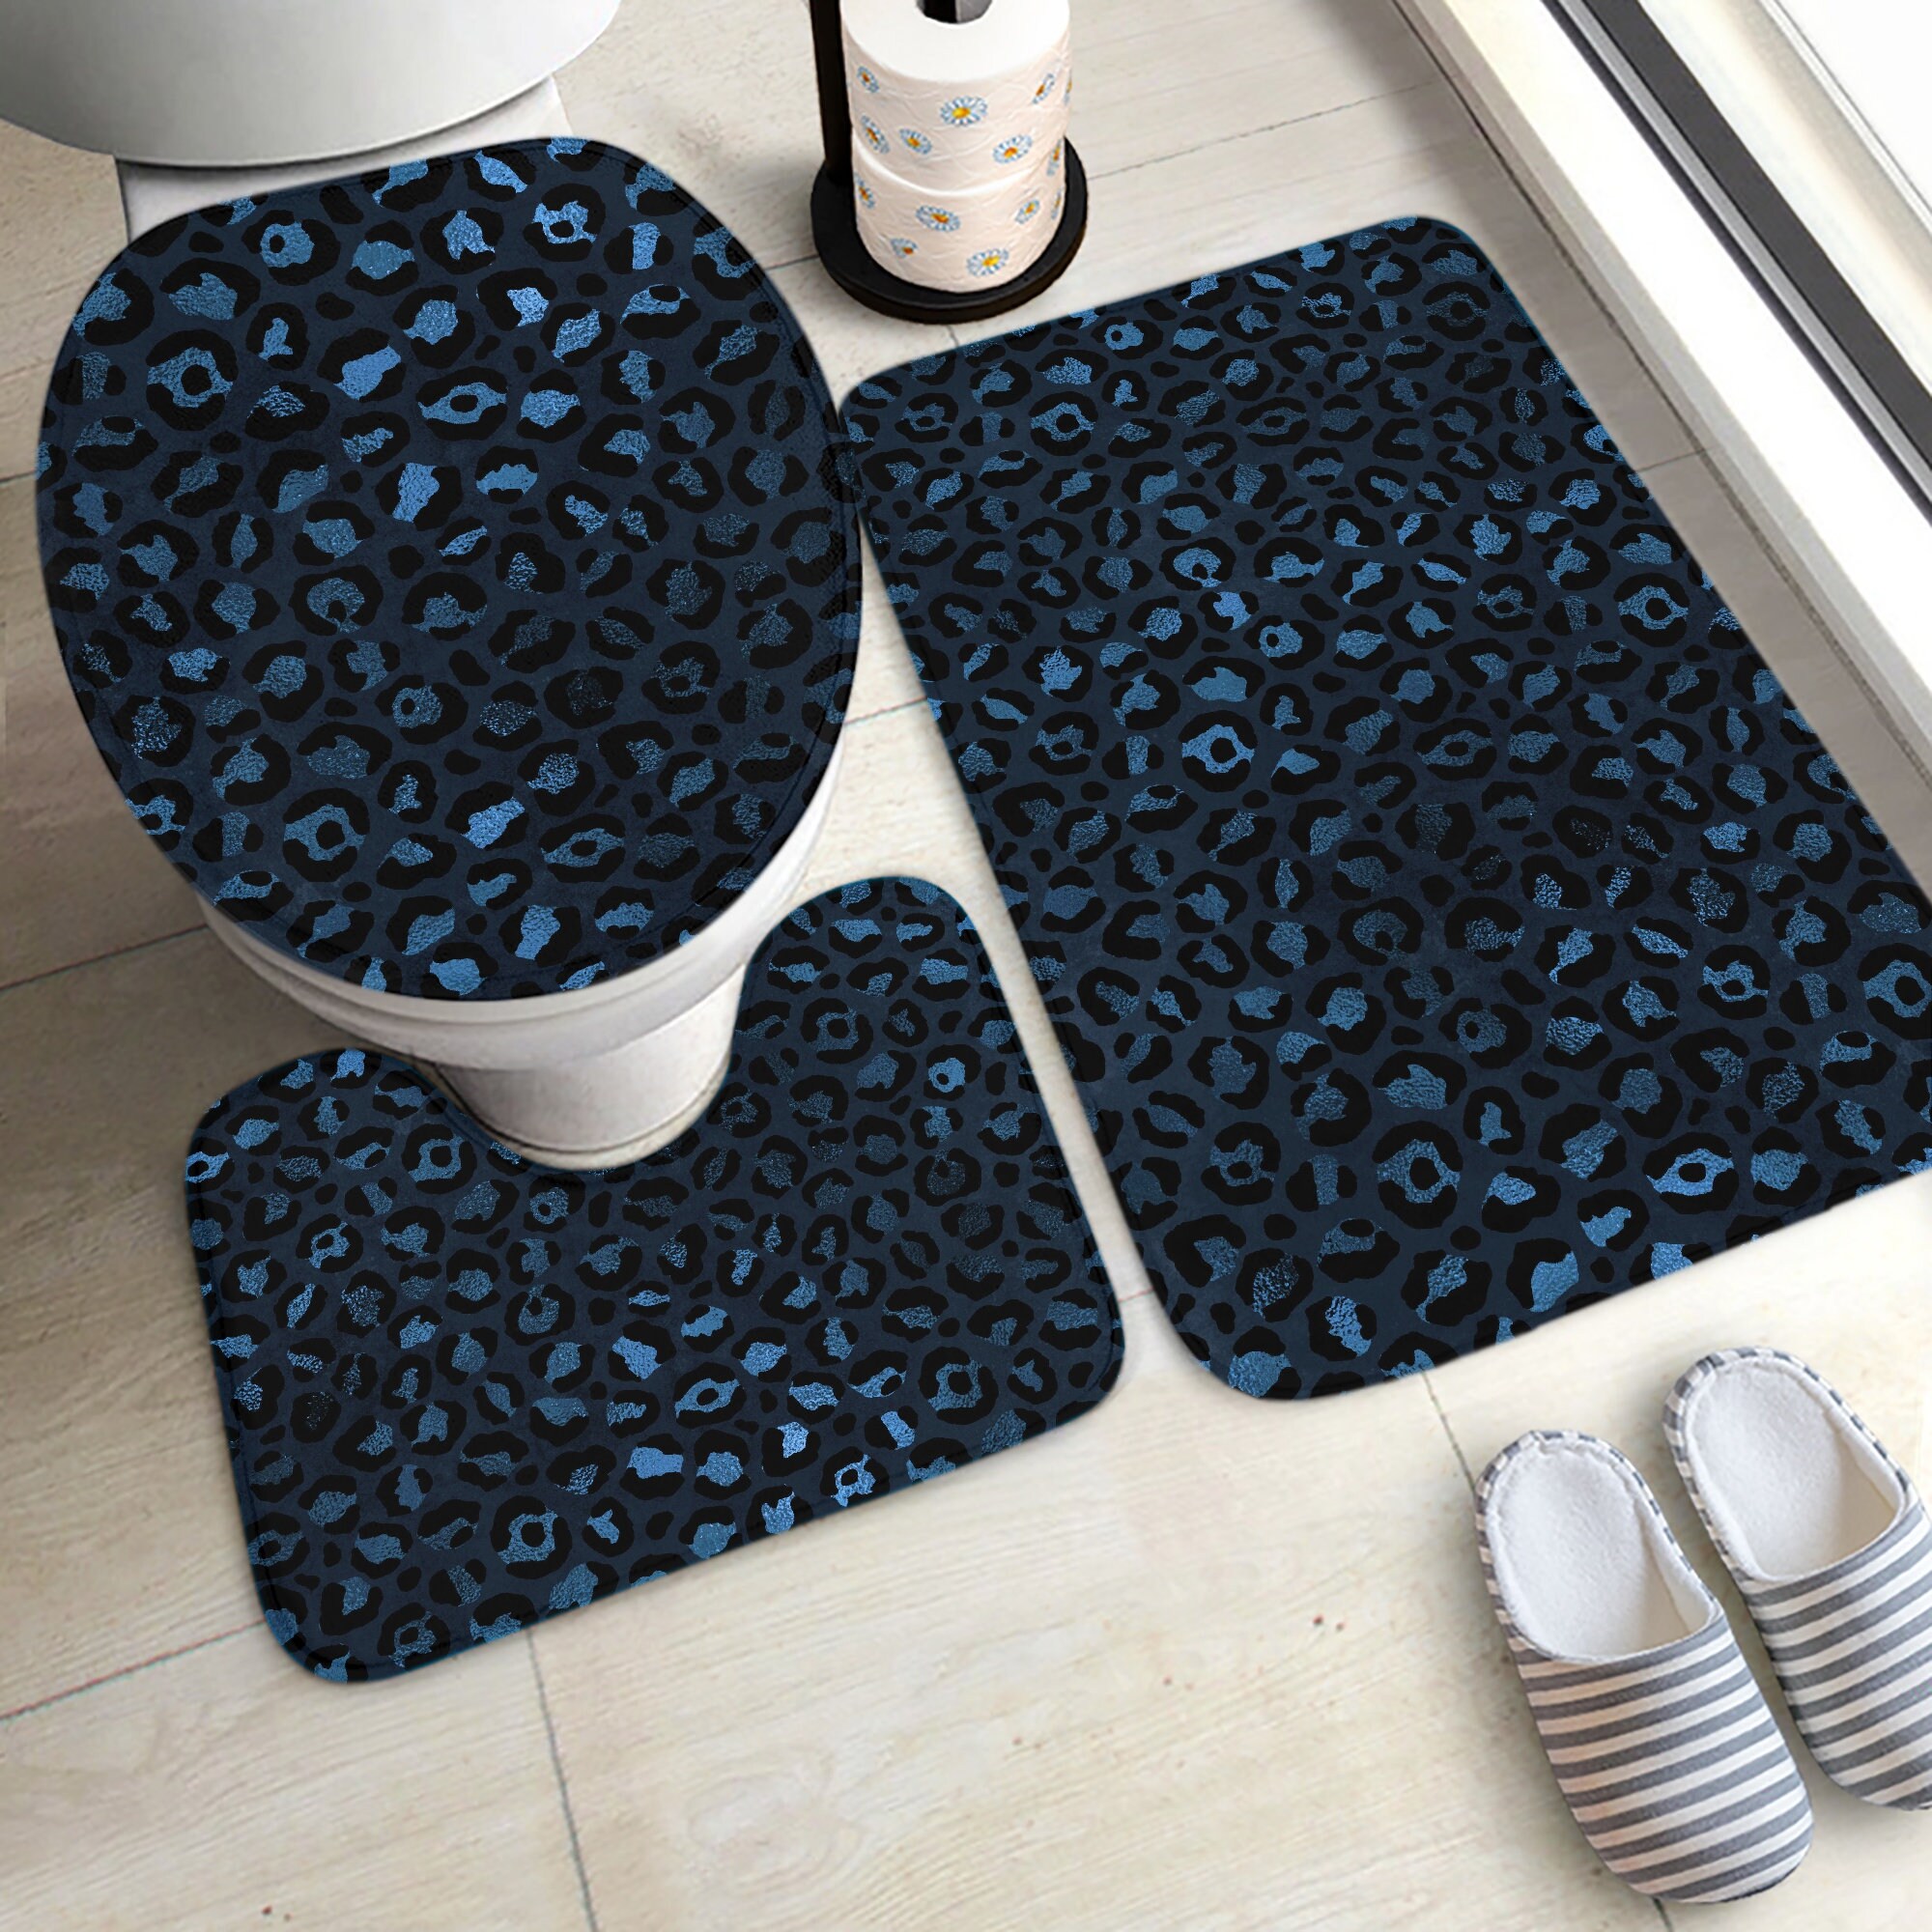 Leopard Print Bathroom Mat Set, Crystal Velvet Toilet Rug Set